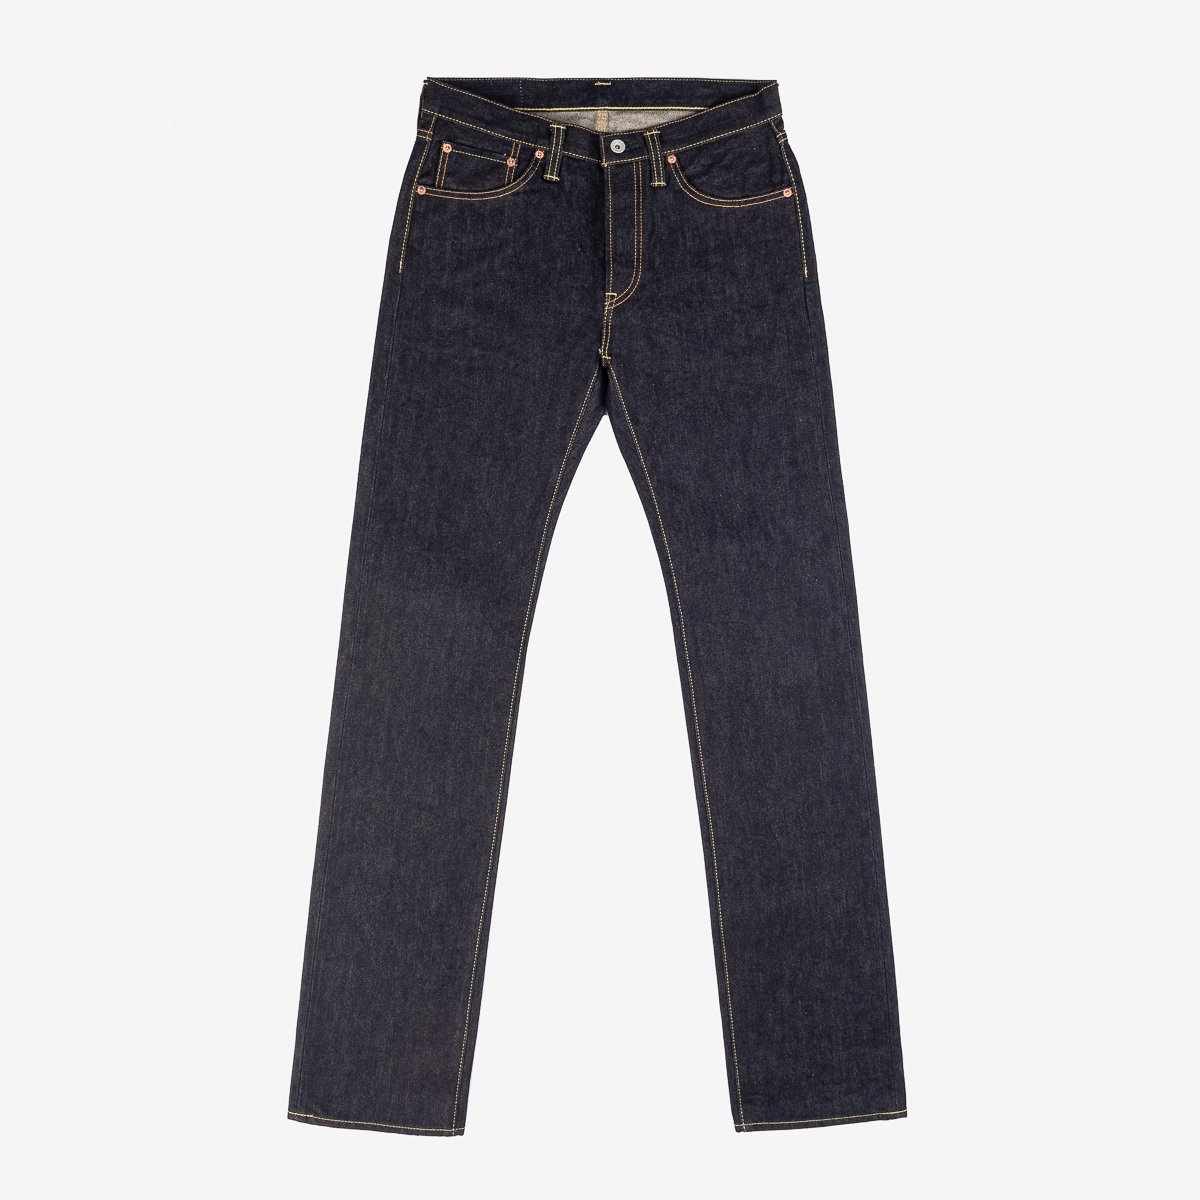 IH-666S-142 14oz Selvedge Denim Slim Straight Cut Jeans - Indigo - 1